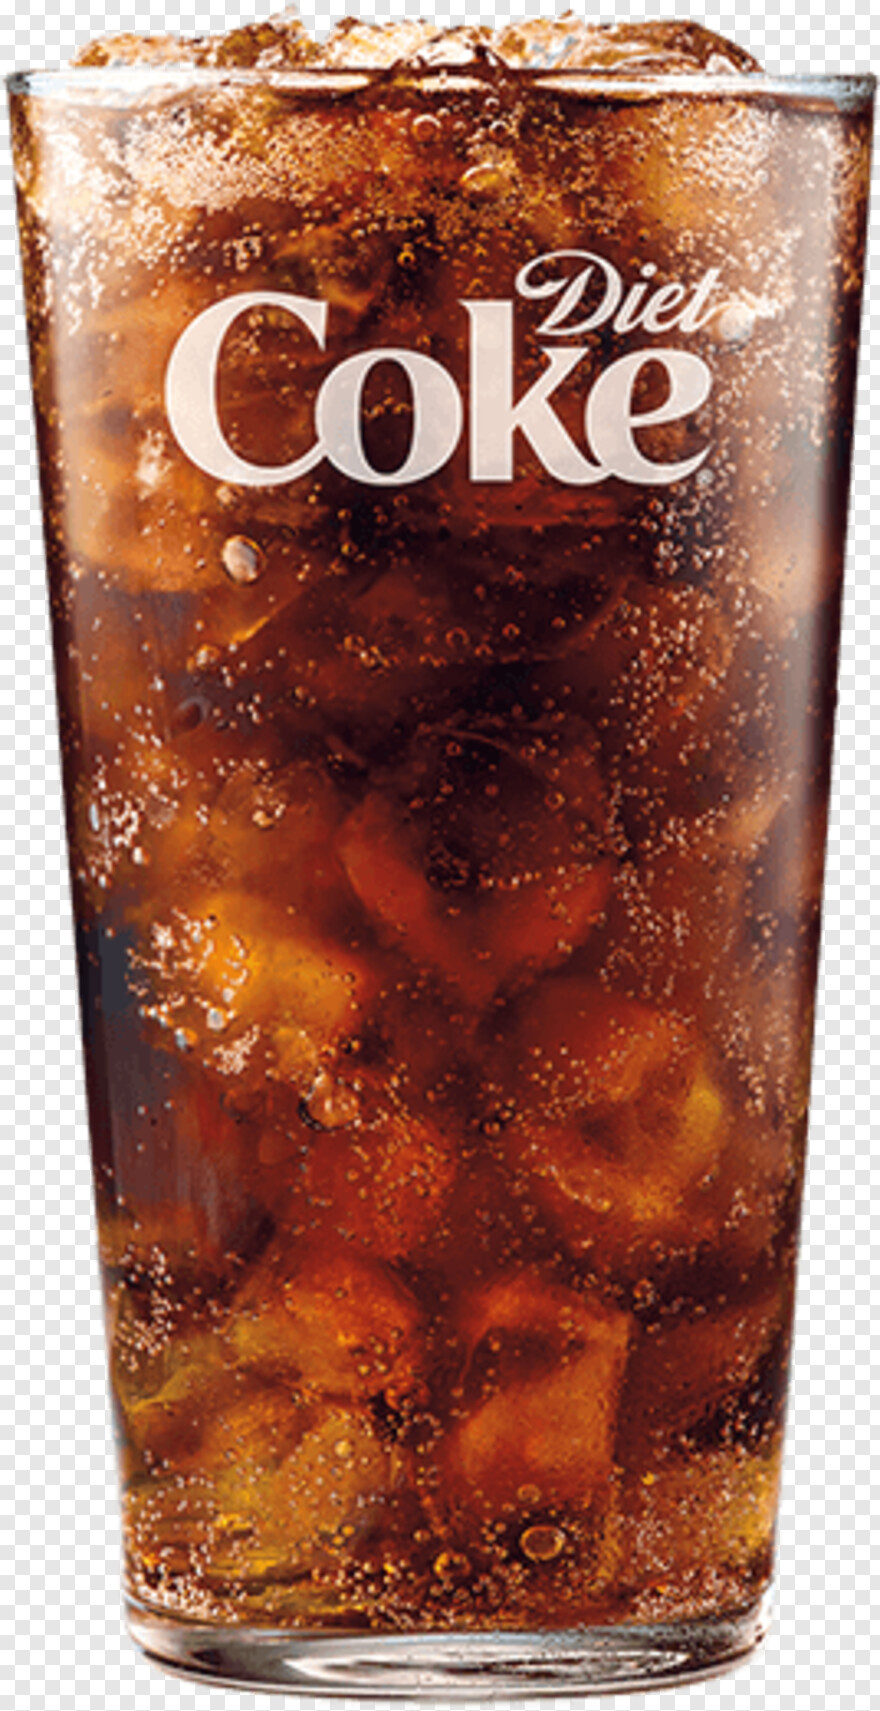 coke-can # 986764